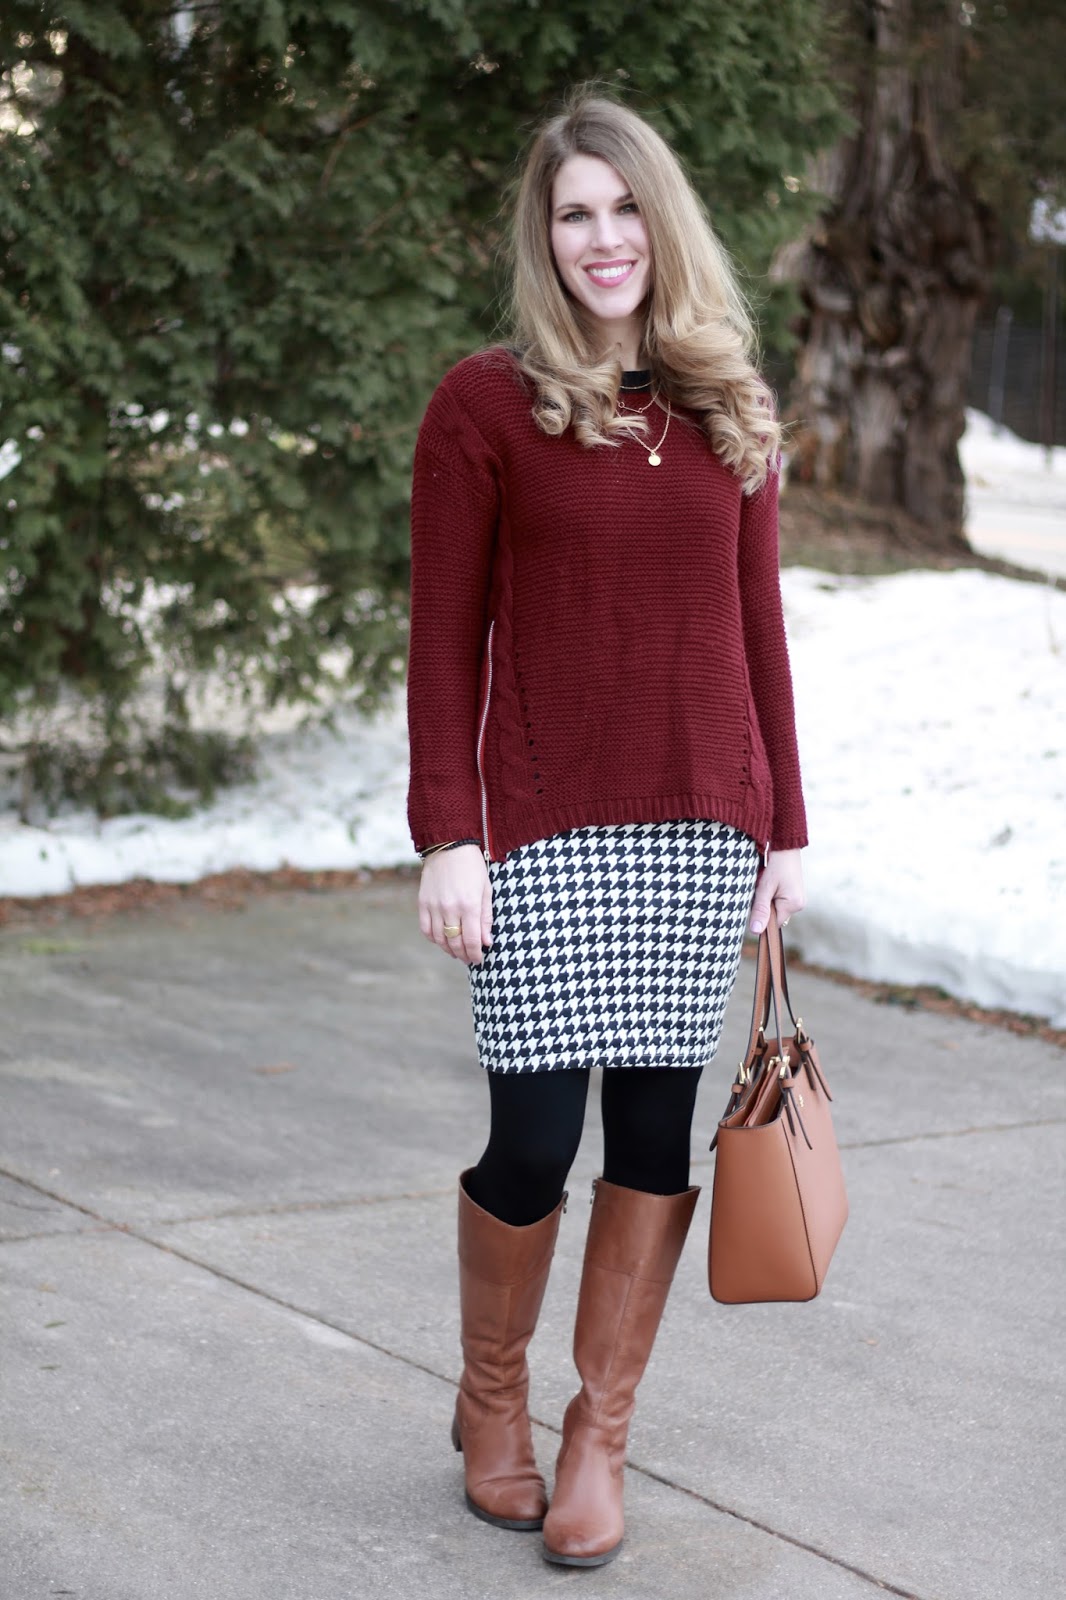 I do deClaire: Burgundy Sweater & Houndstooth Skirt